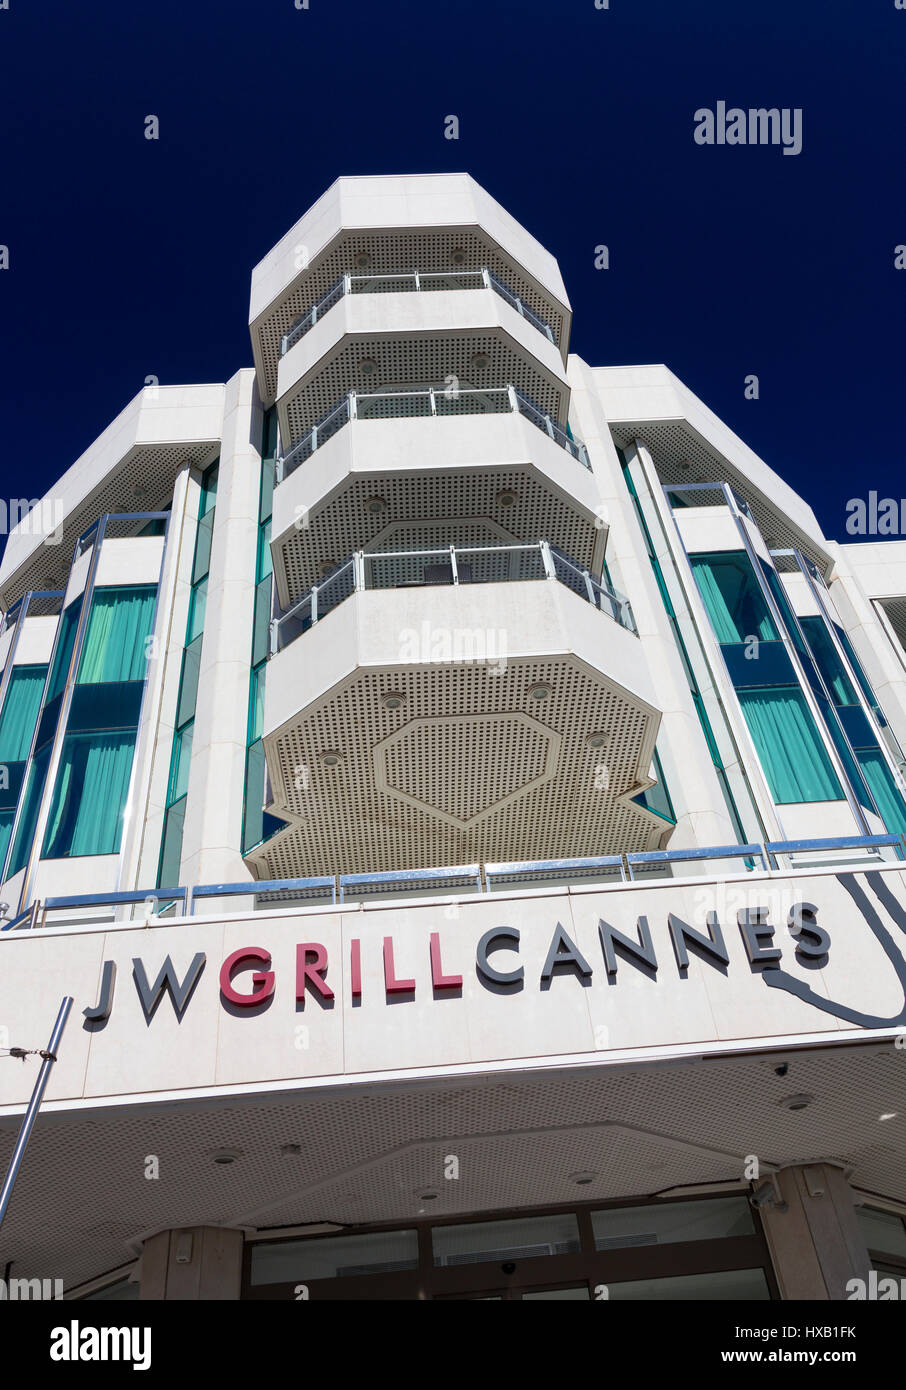 JW Marriott Hotel & Casino Cannes, France Stock Photo